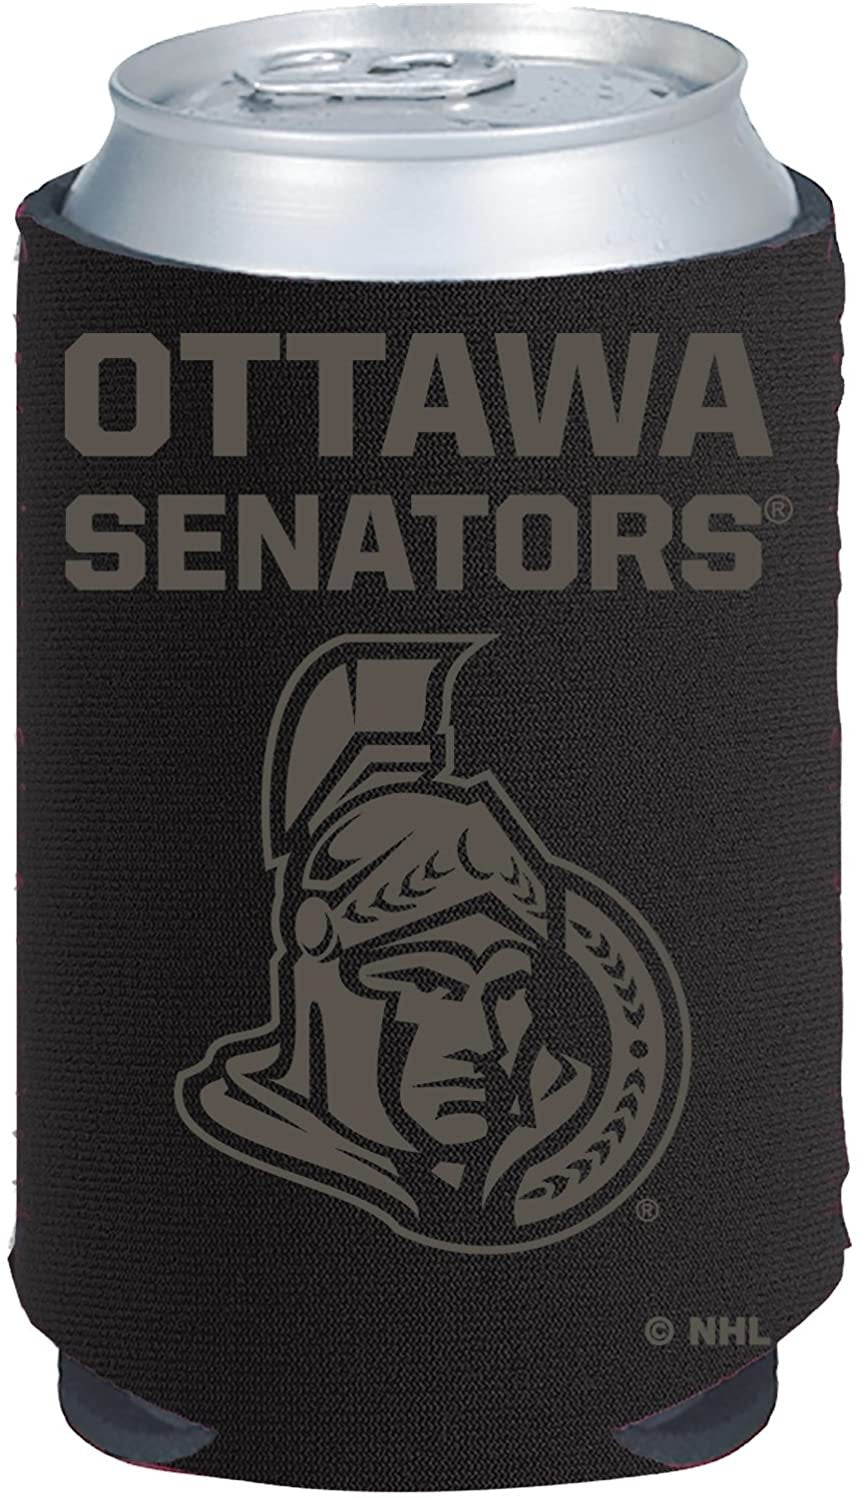 Ottawa Senators 2-Pack Black Tonal CAN Beverage Insulator Neoprene Holder Cooler Decal Hockey